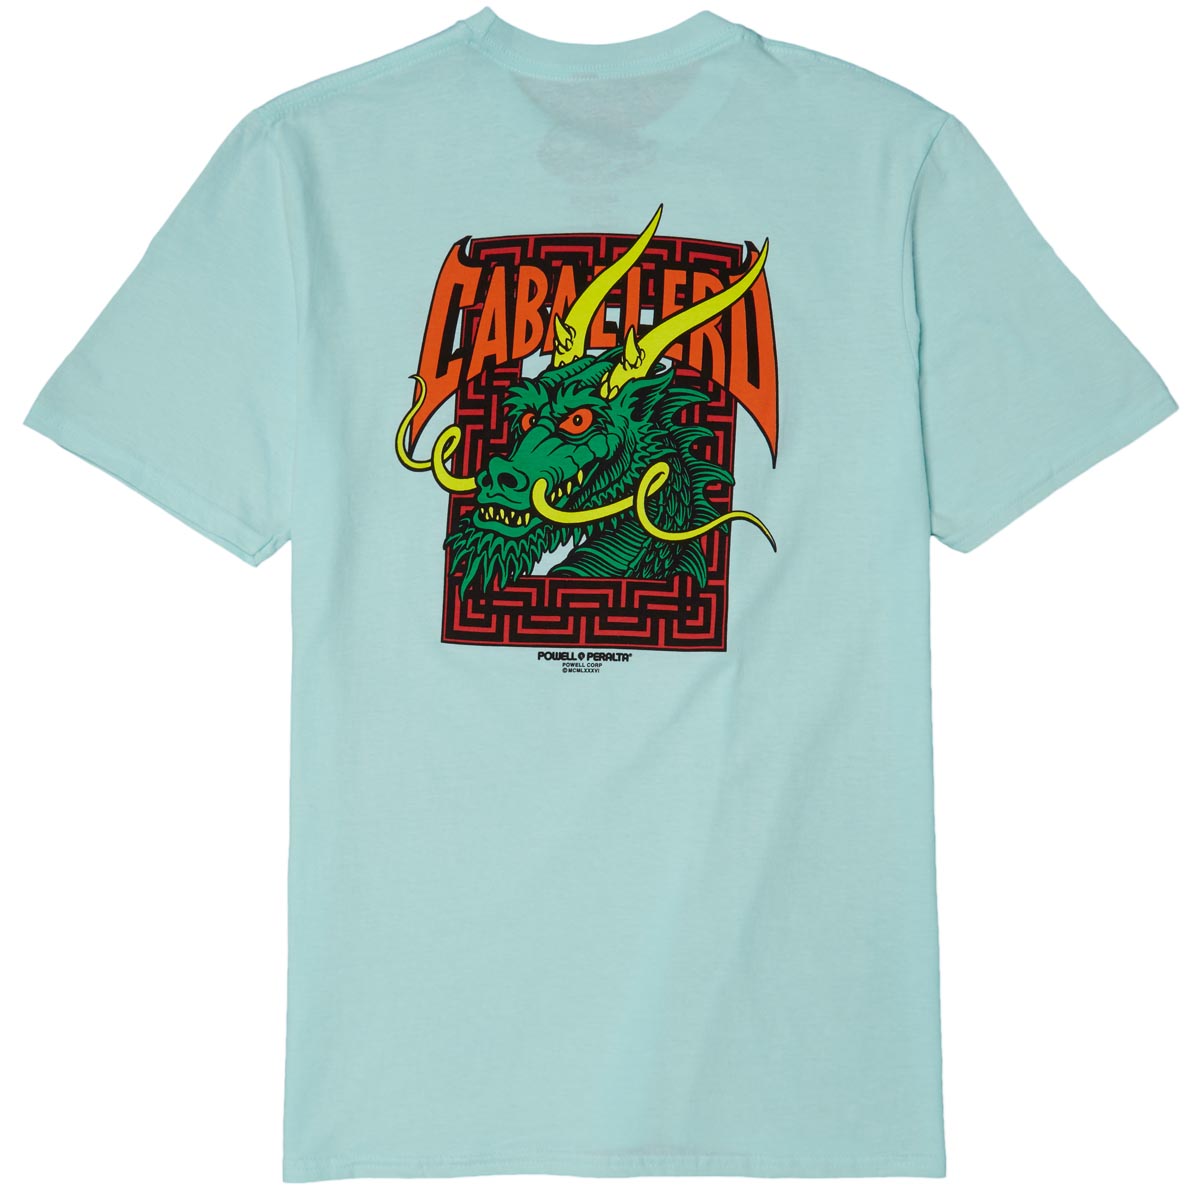 Powell-Peralta Steve Caballero Street Dragon T-Shirt - Teal Ice image 3